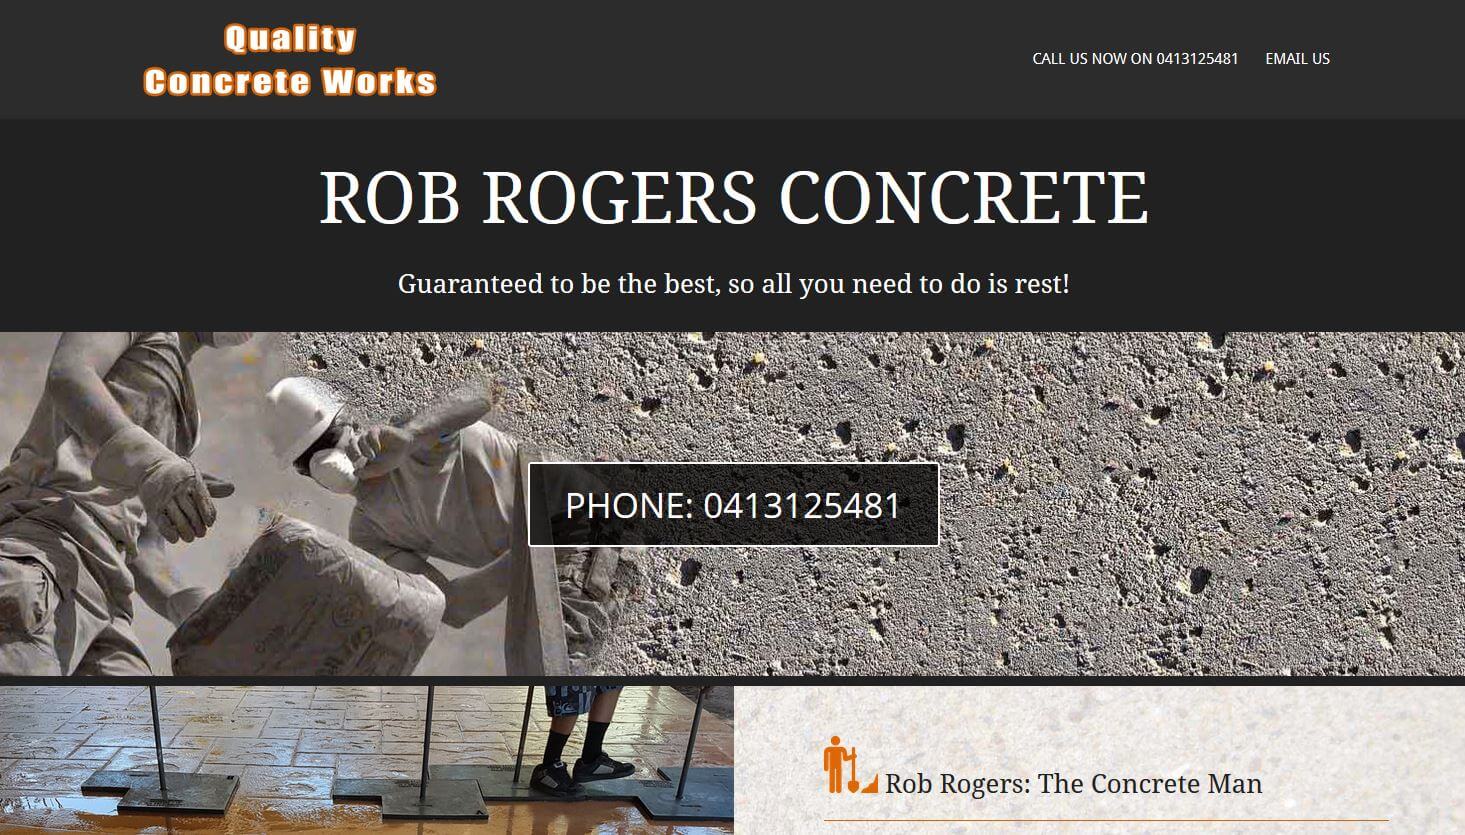 Website for a concrete business